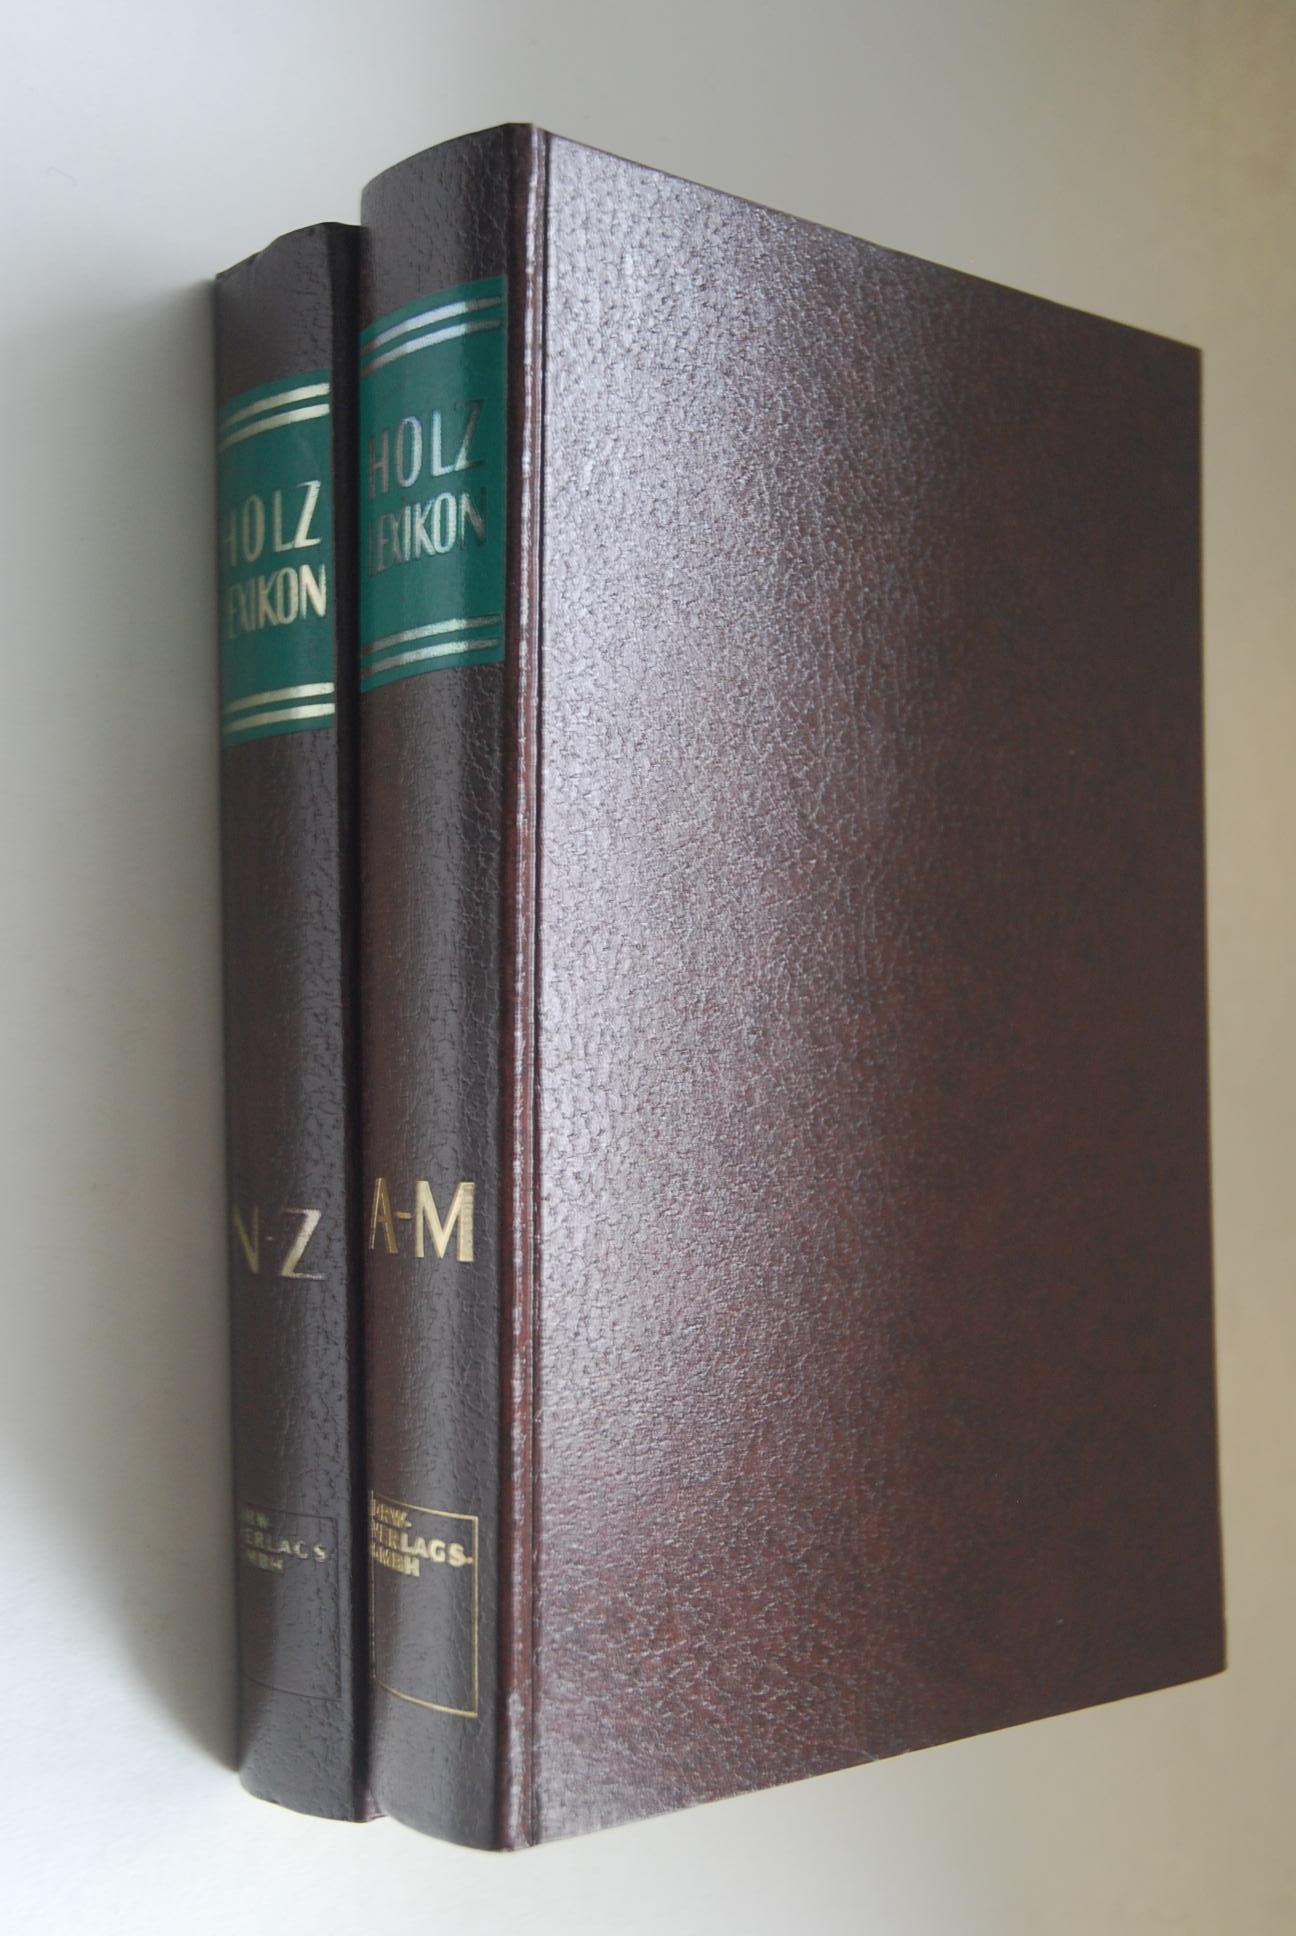 Holz-Lexikon; Teil: Bd. 1., A - M - Bd. 2 N - Z - König, Ewald, H. Augustin W. Brocker u. a.